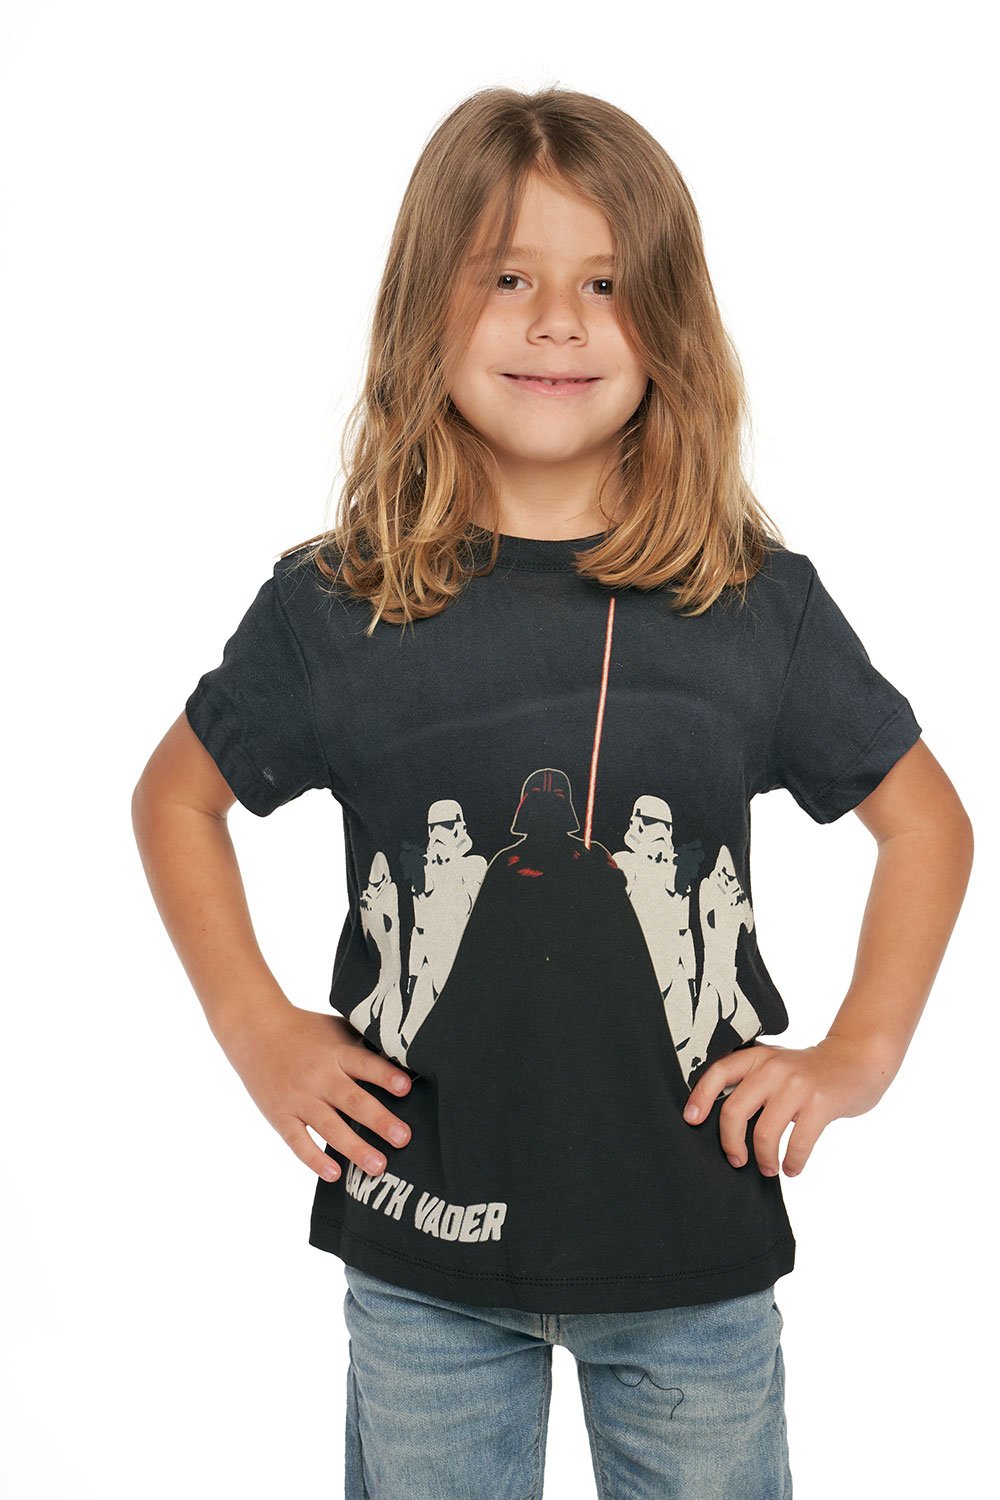 Chaser Kids Star Wars-Darth Vader Tee in Faded Black - FINAL SALE